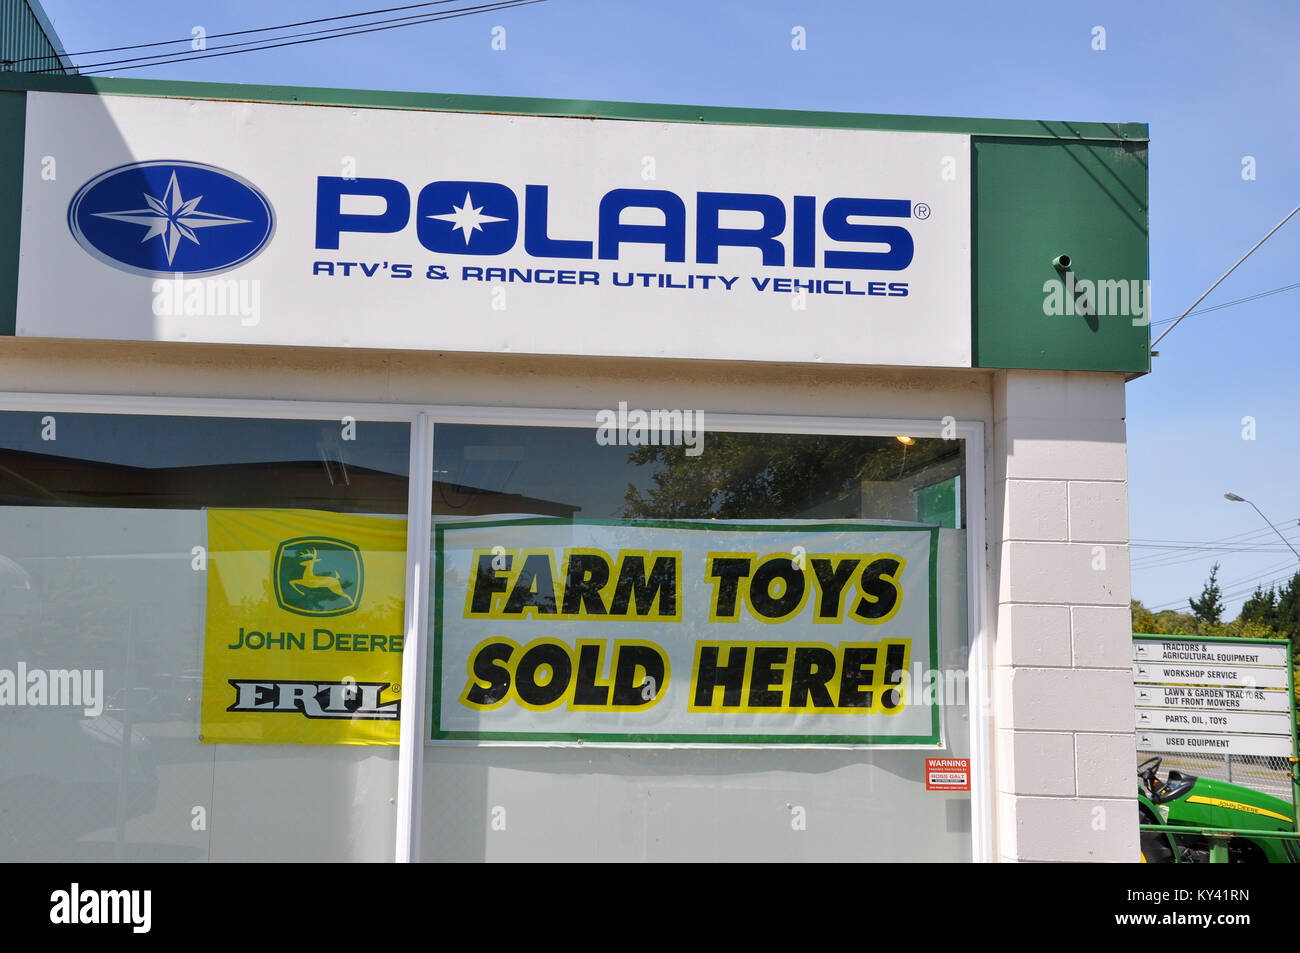 Farm equipment store in New Zealand with comedy slogan Farm Toys Sold Here. Polaris ATV's & Ranger Utility Vehicles - misused apostrophe advert Stock Photo